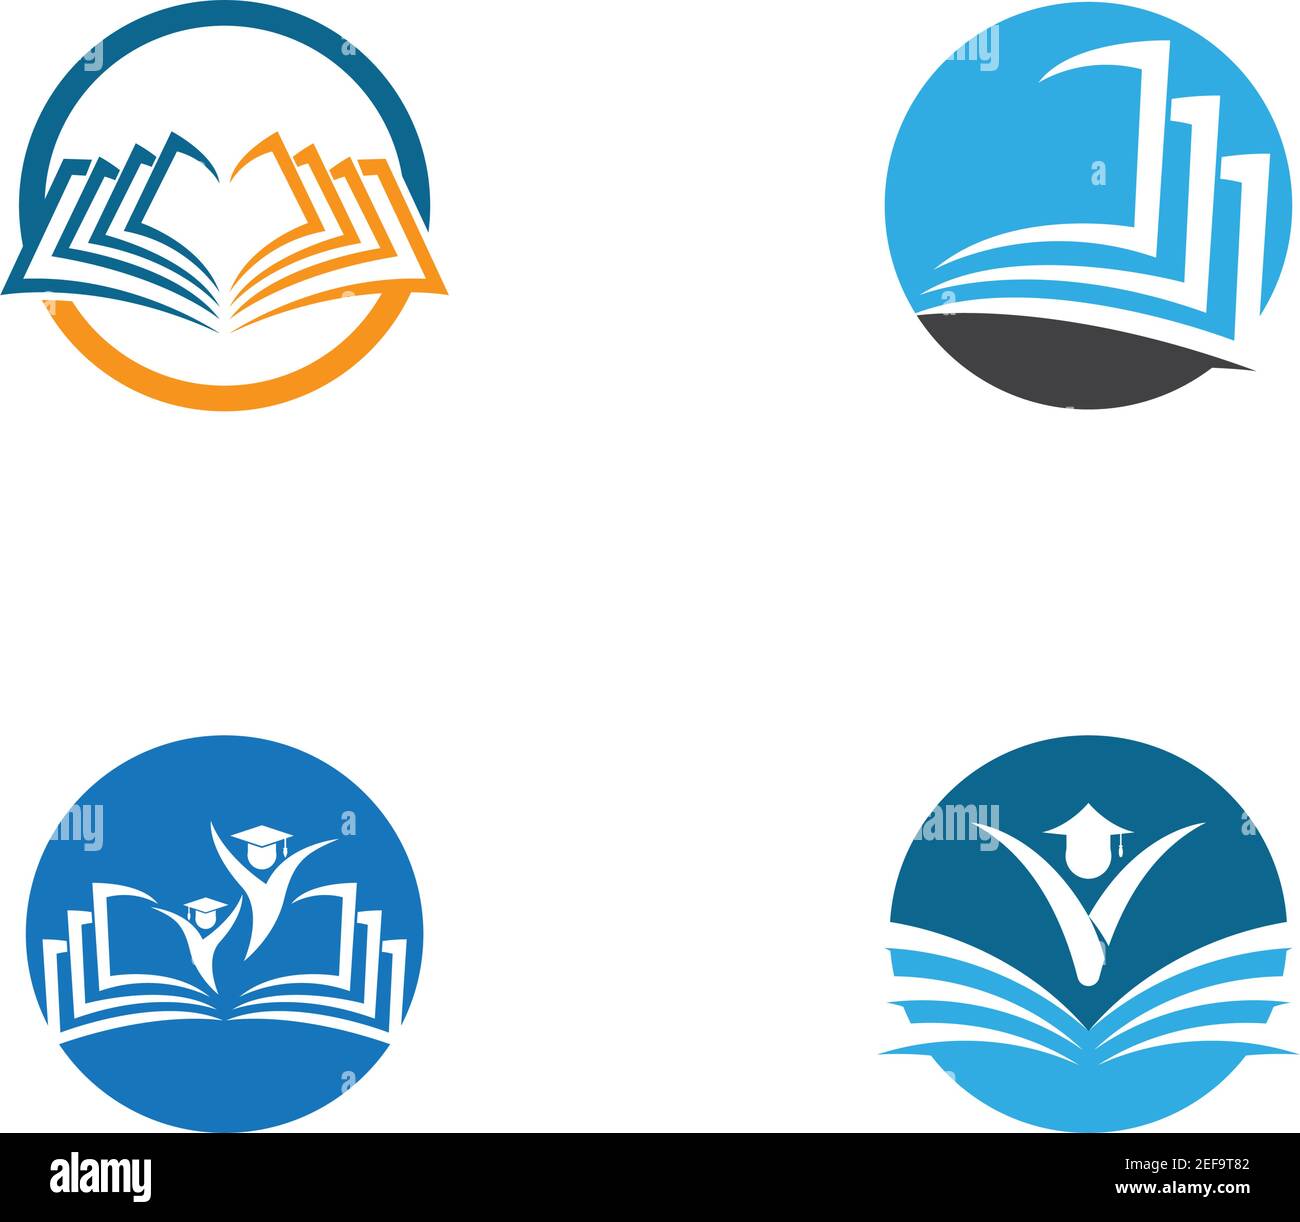 Book logo images illustration design Stock Vector